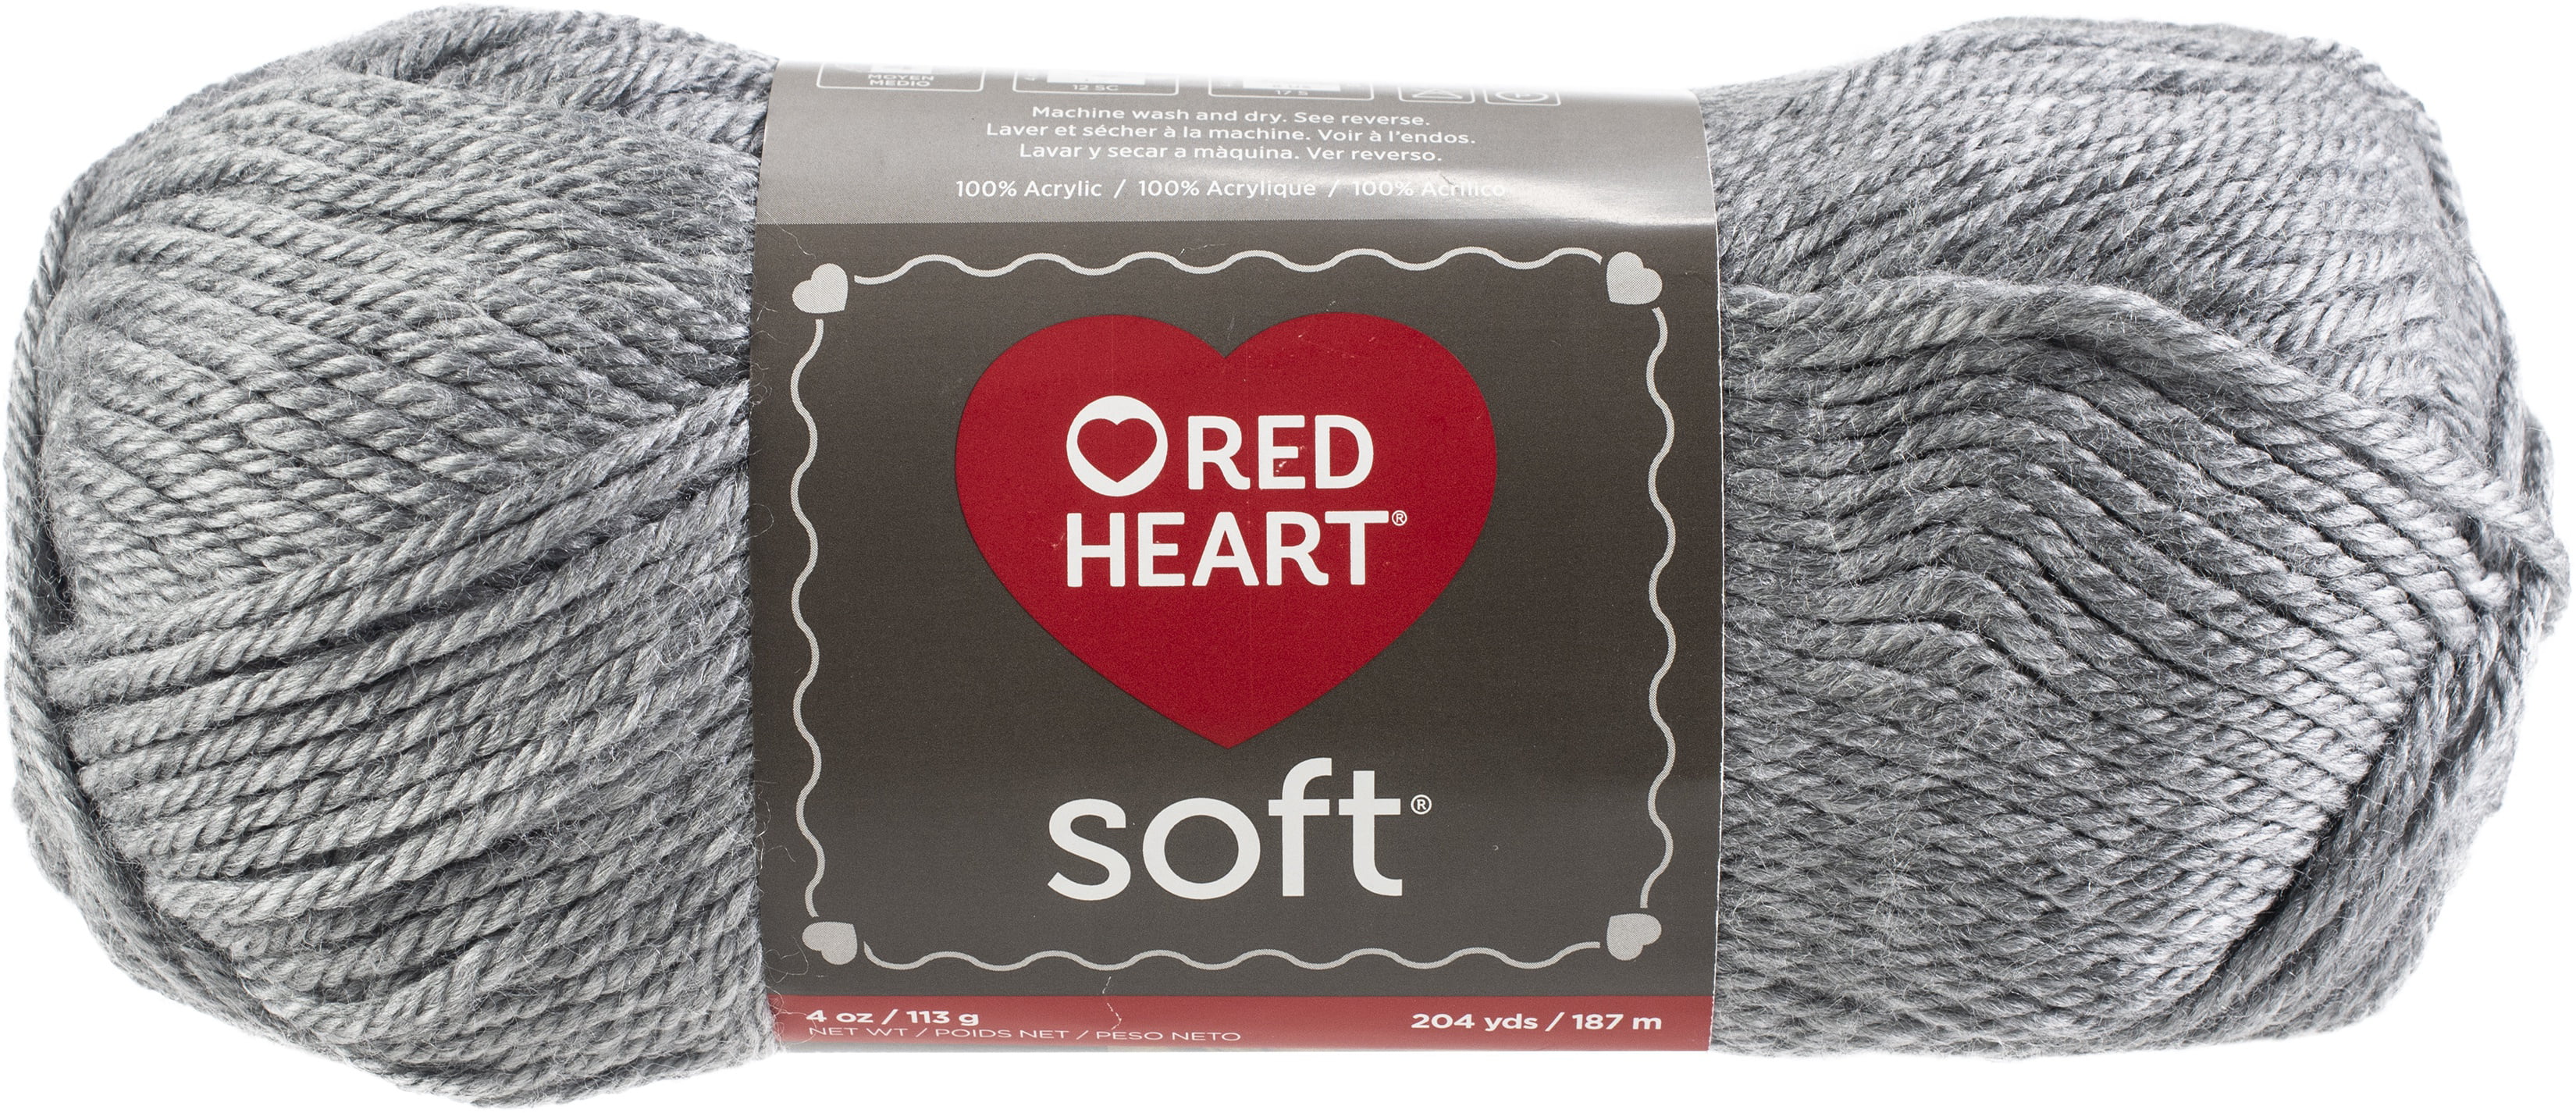 Red Heart Soft Yarn-Light Grey Heather Has Elegant Drape Ideal For Fashion Look 